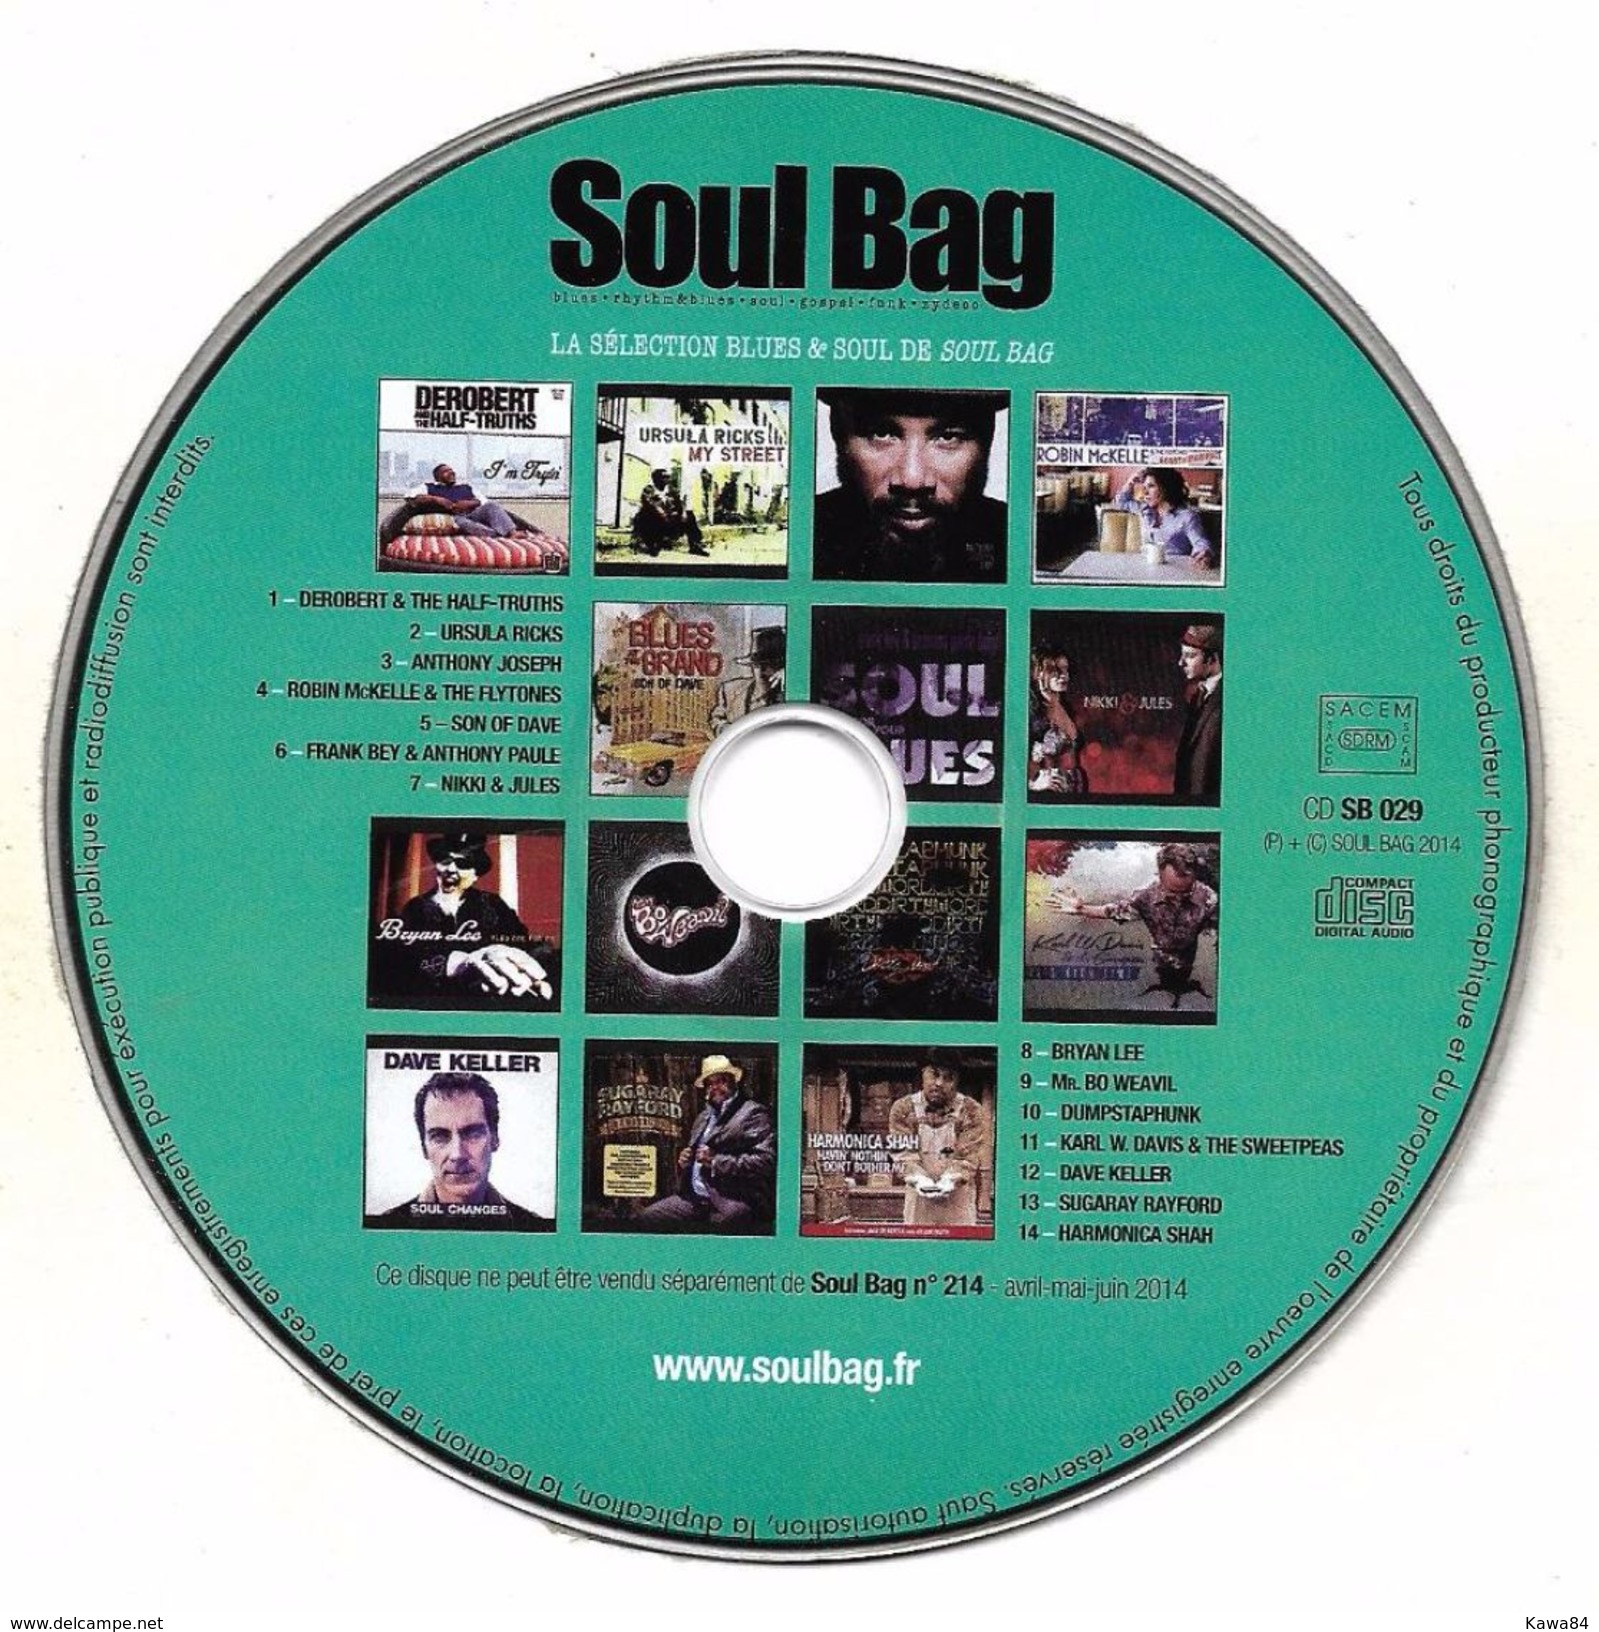 CD  Various Artists  "  Soul Bag  "  Promo - Collectors